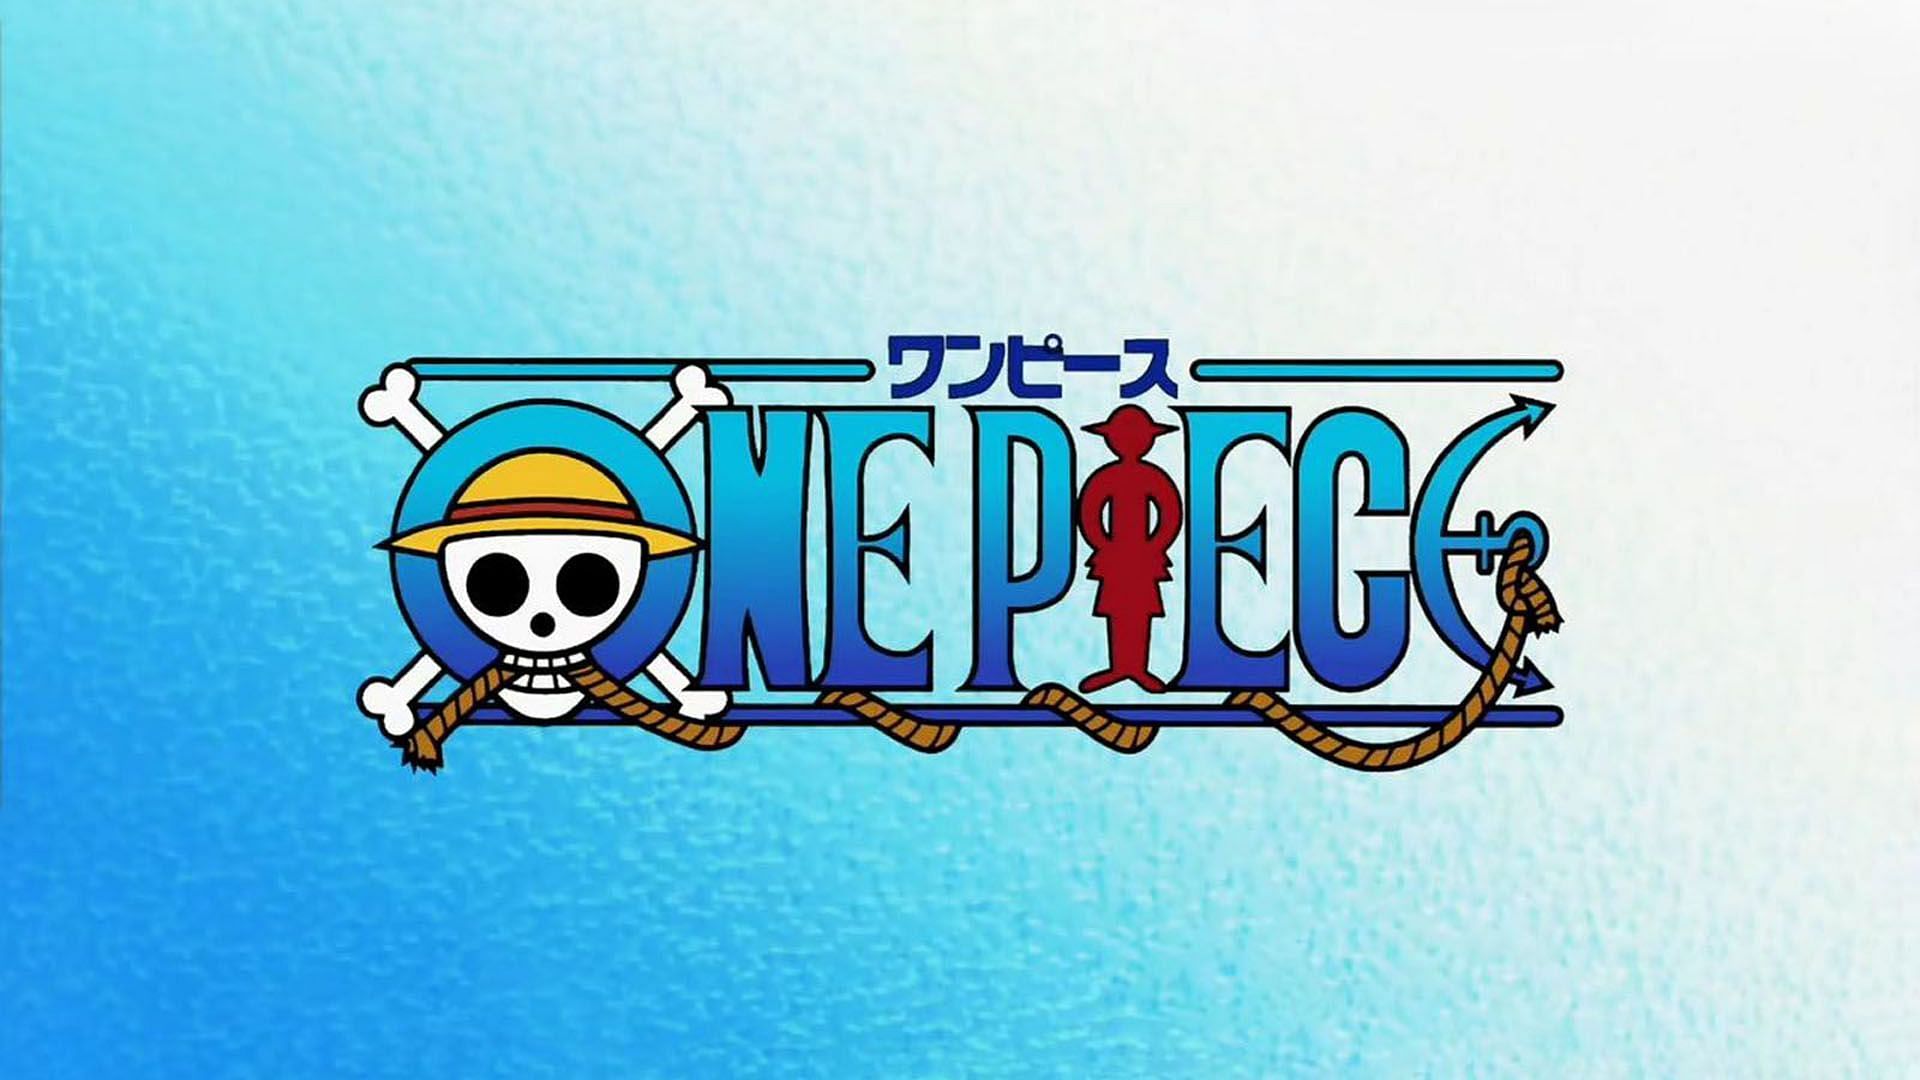 One of the series logos for One Piece (Image Credits: Eiichiro Oda/Shueisha, Viz Media, One Piece)